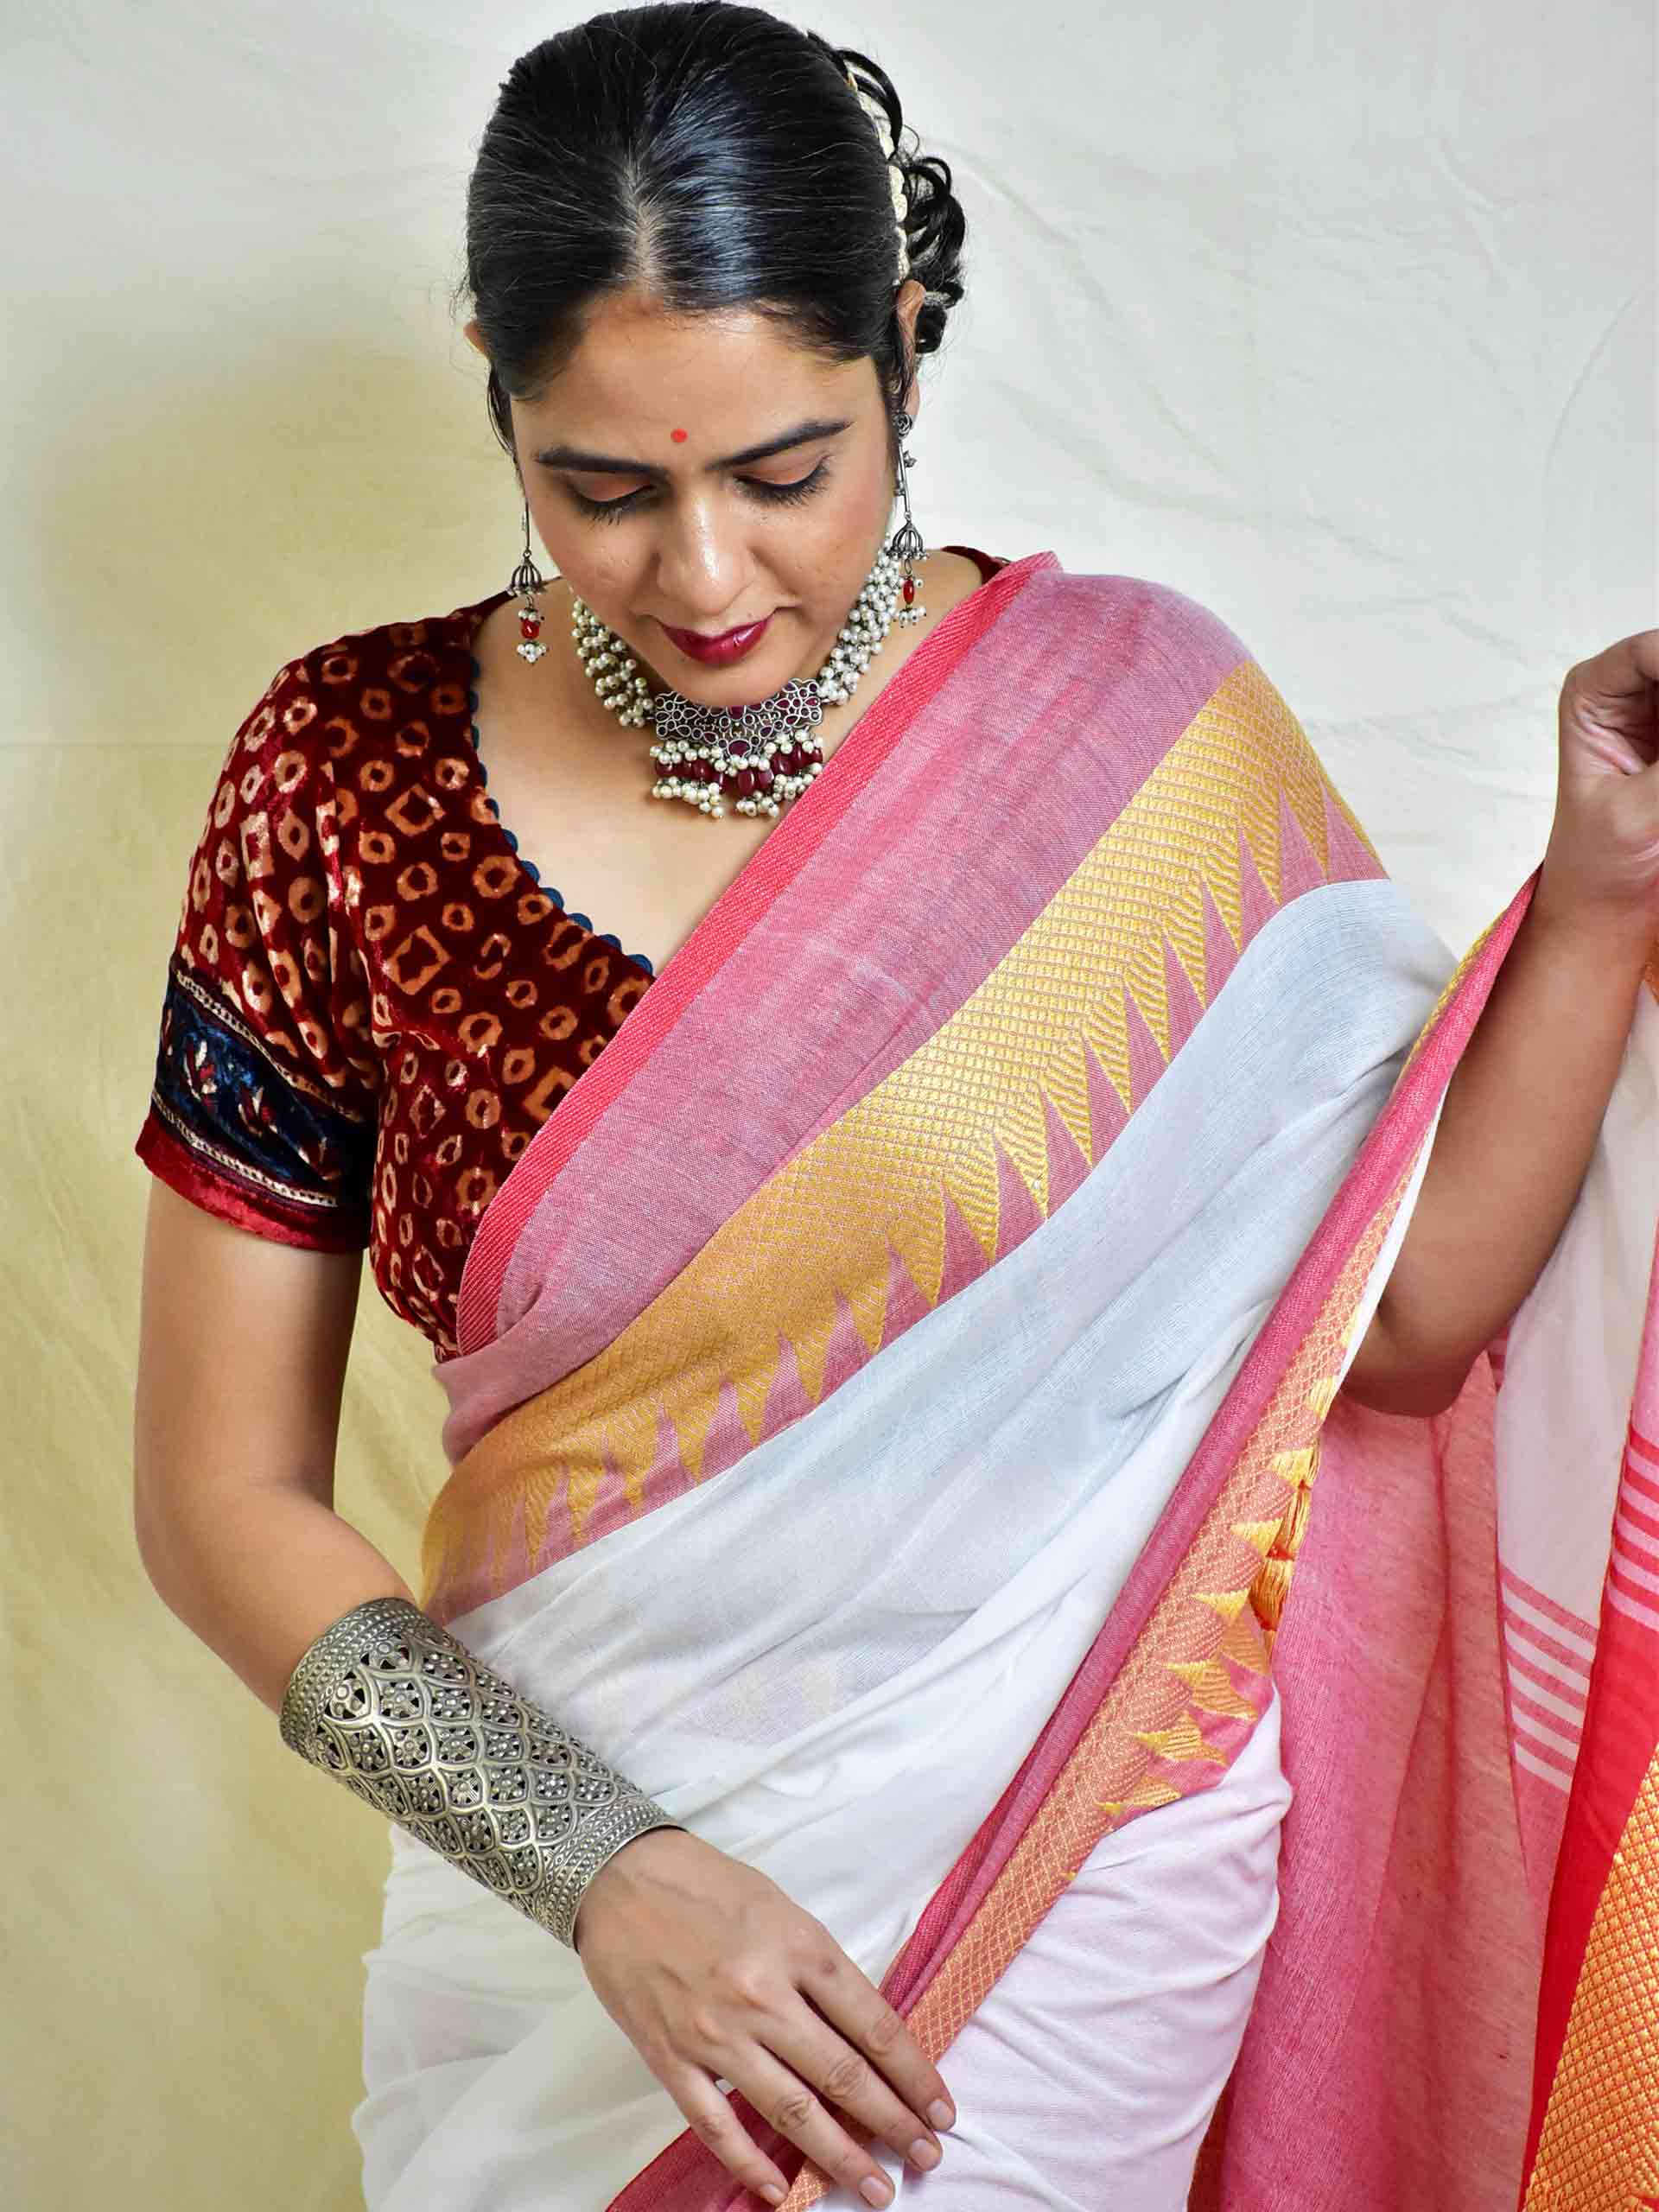 Simple Yet Astonishing Ways to Drape a Bengali Saree | by Bengali Fashion |  Medium